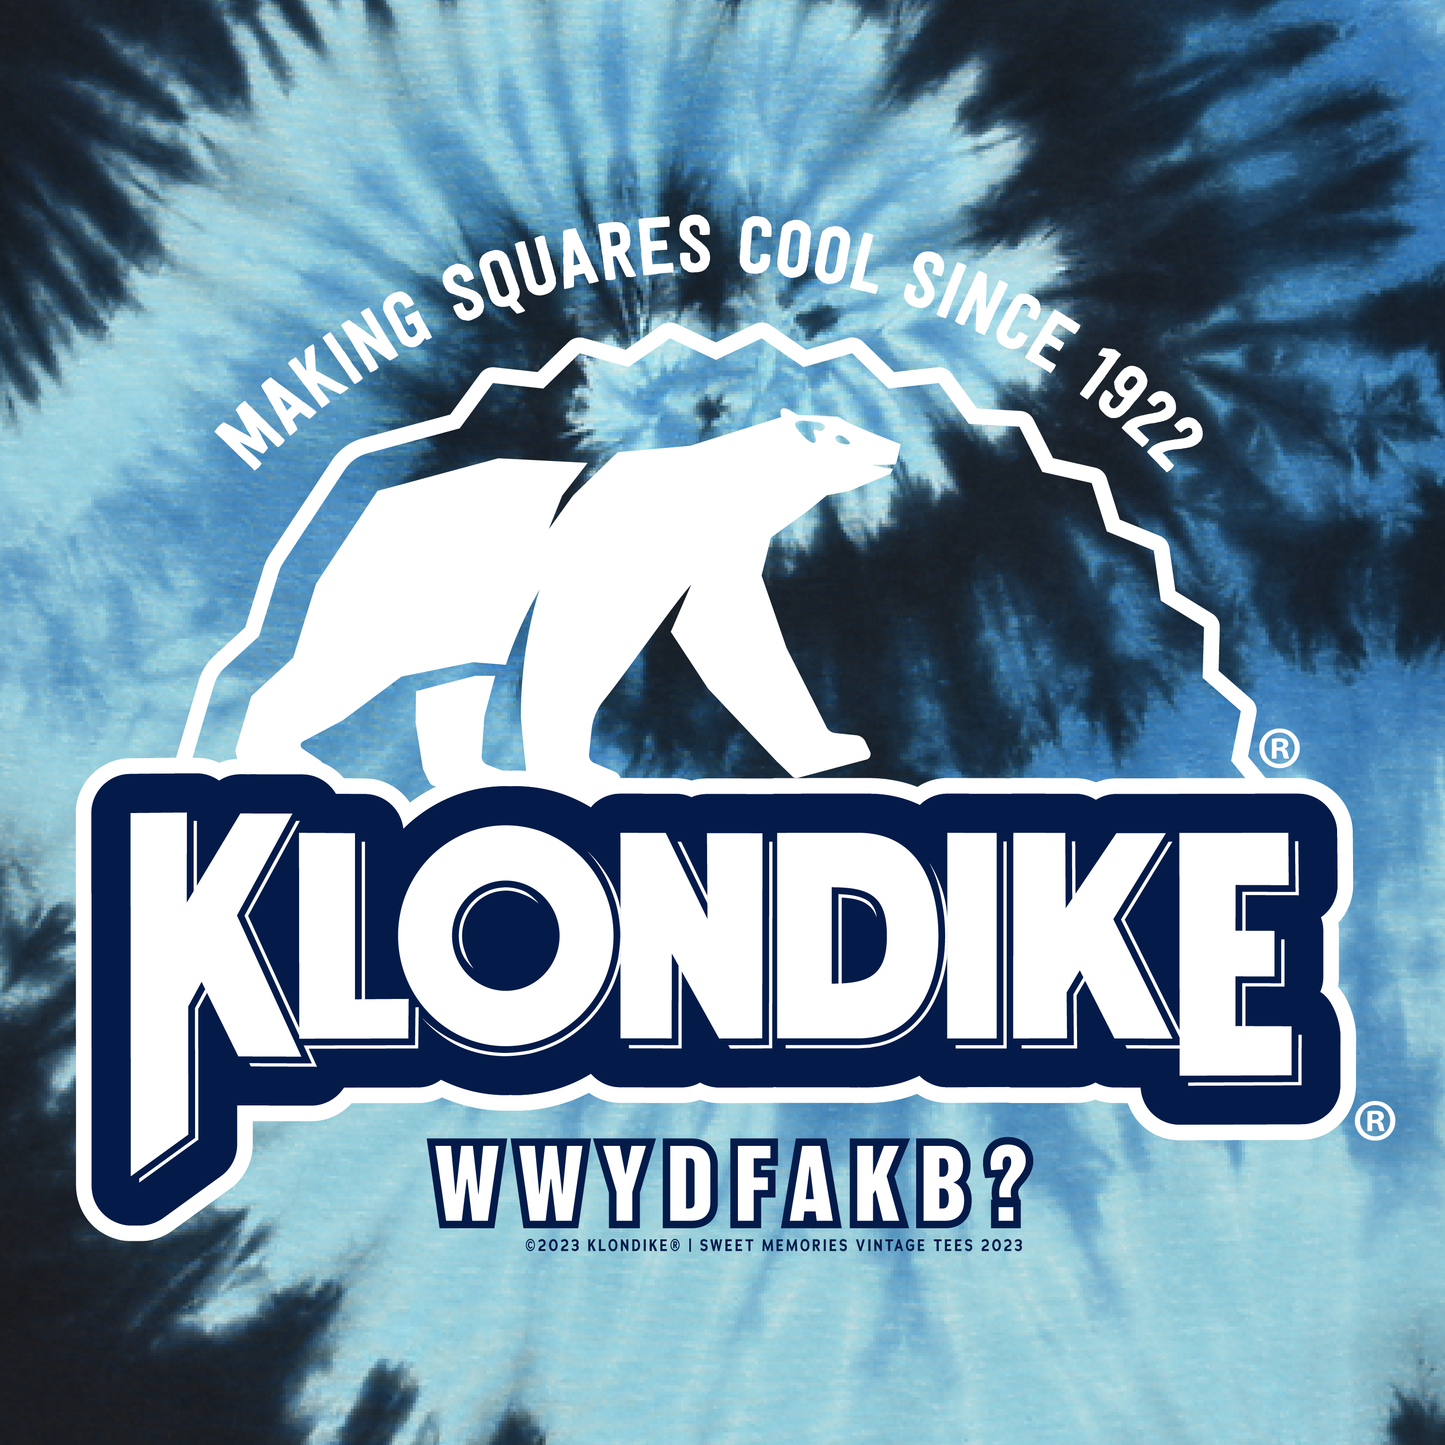 Klondike ® Making Squares Cool Since 1922 Unisex Tie-Dye Shirt